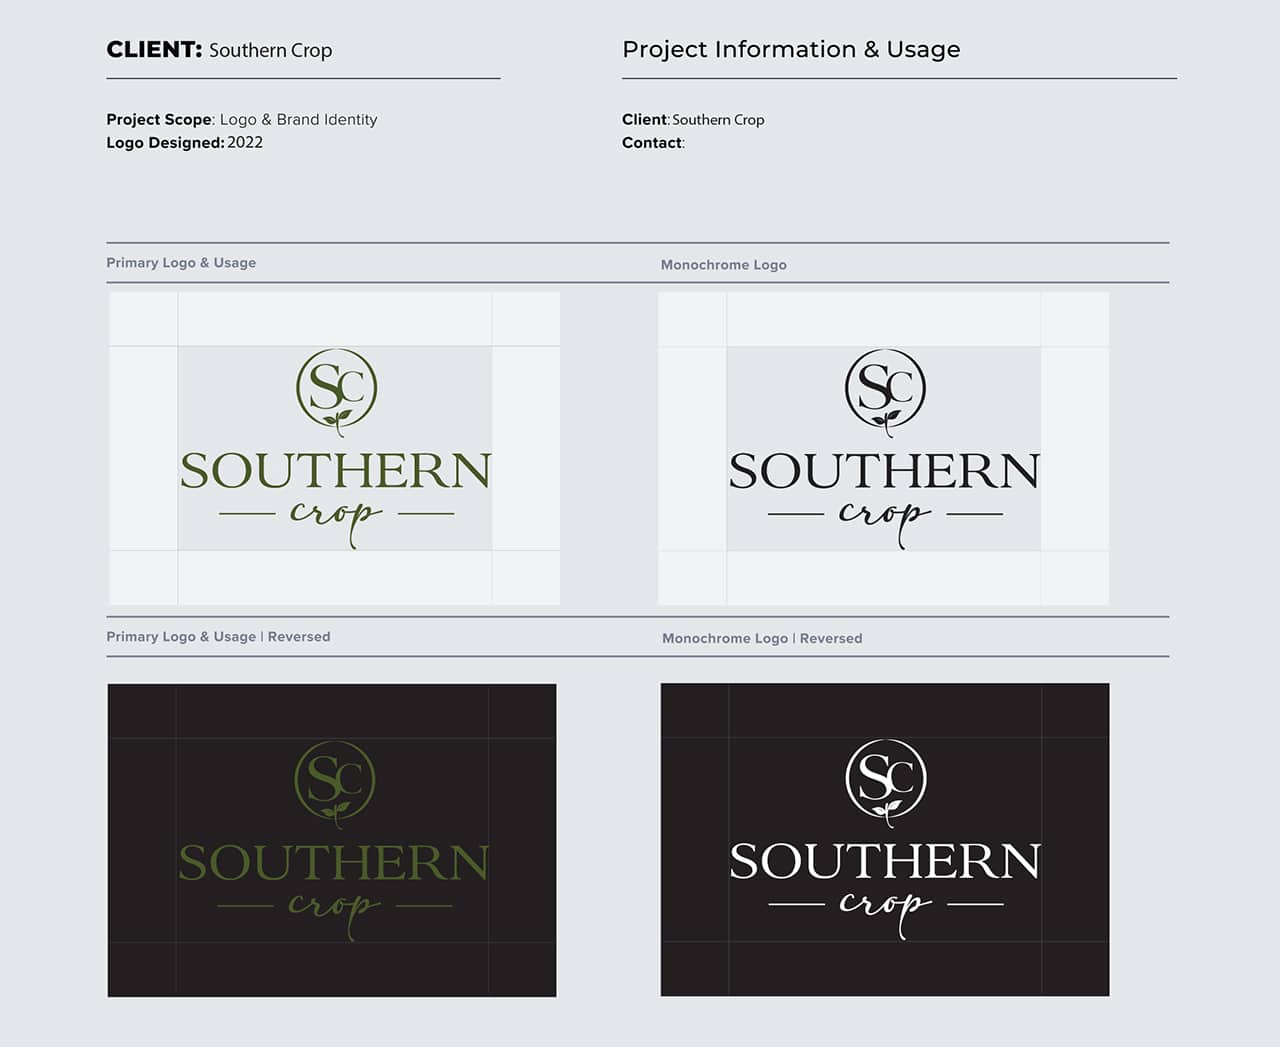 SouthernCrop-LogoUsageStandards